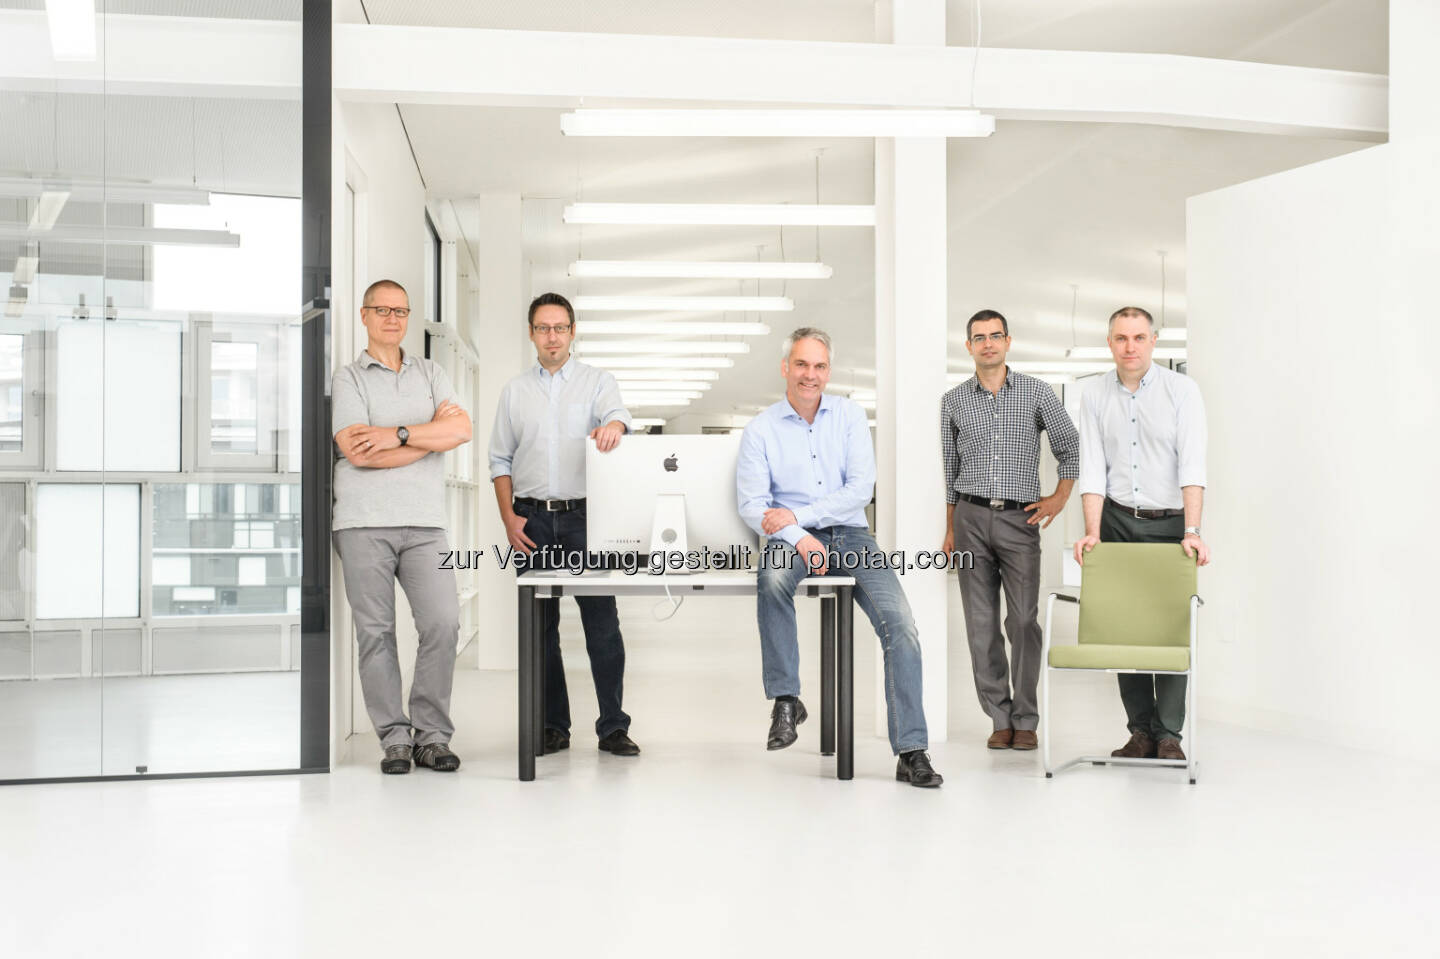 Ernst Hefter, Werner Stadlober, Harald Pfeiffer, Mehdi Khodaeifard, Michael Frank: extendIT GmbH: extendIT und futurezone.at starten „futurezone tech-service“, (C) extendIT GmbH